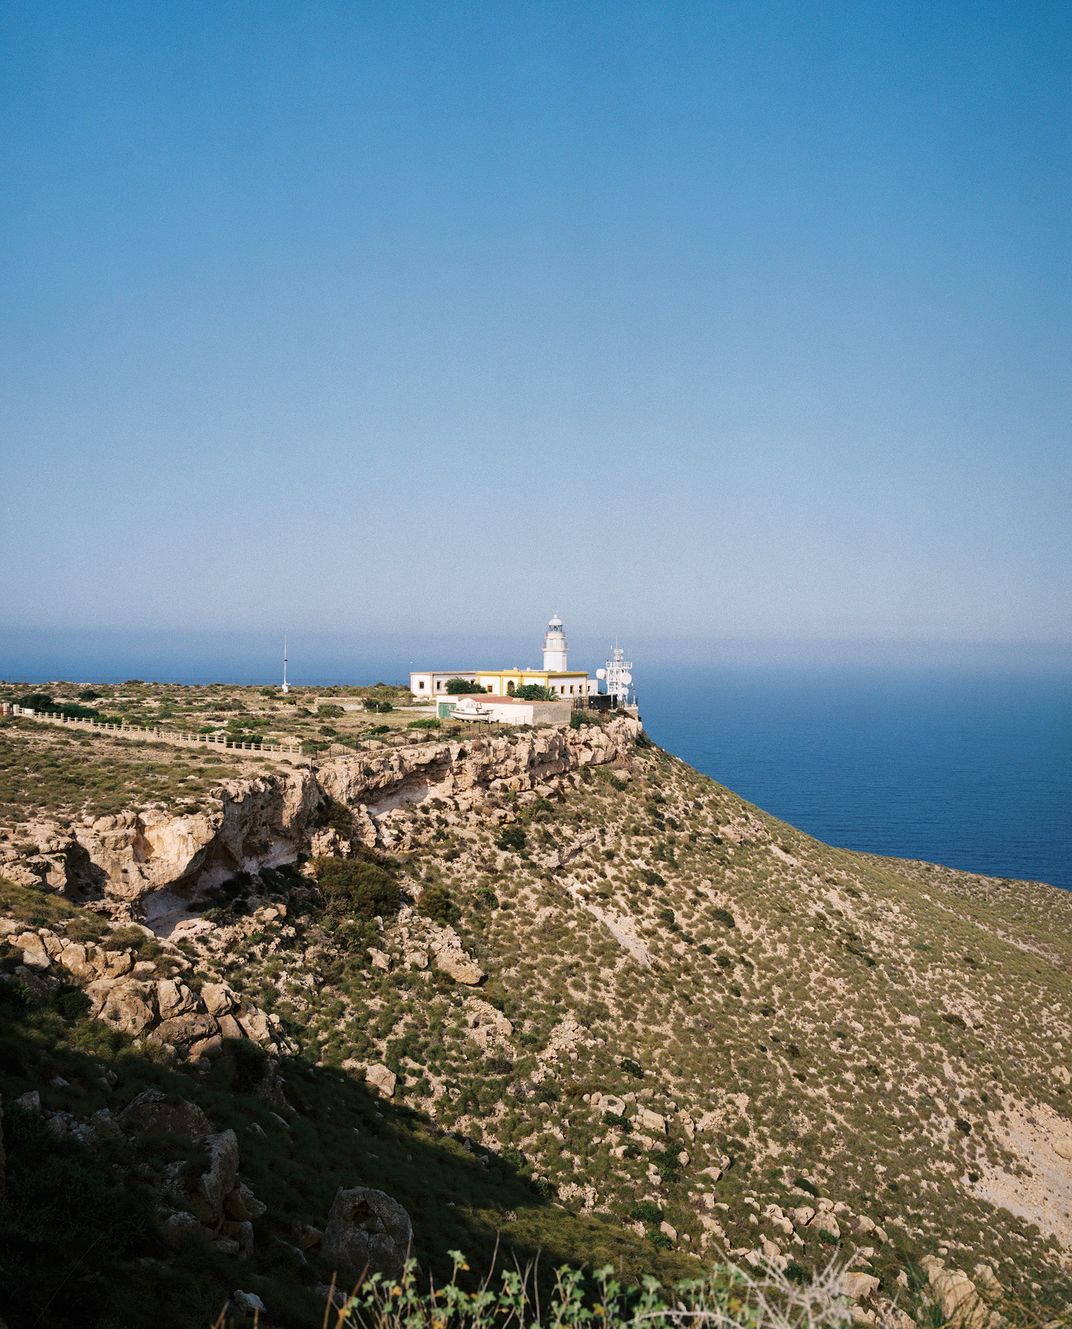 a lighthouse sits on rugged terrain